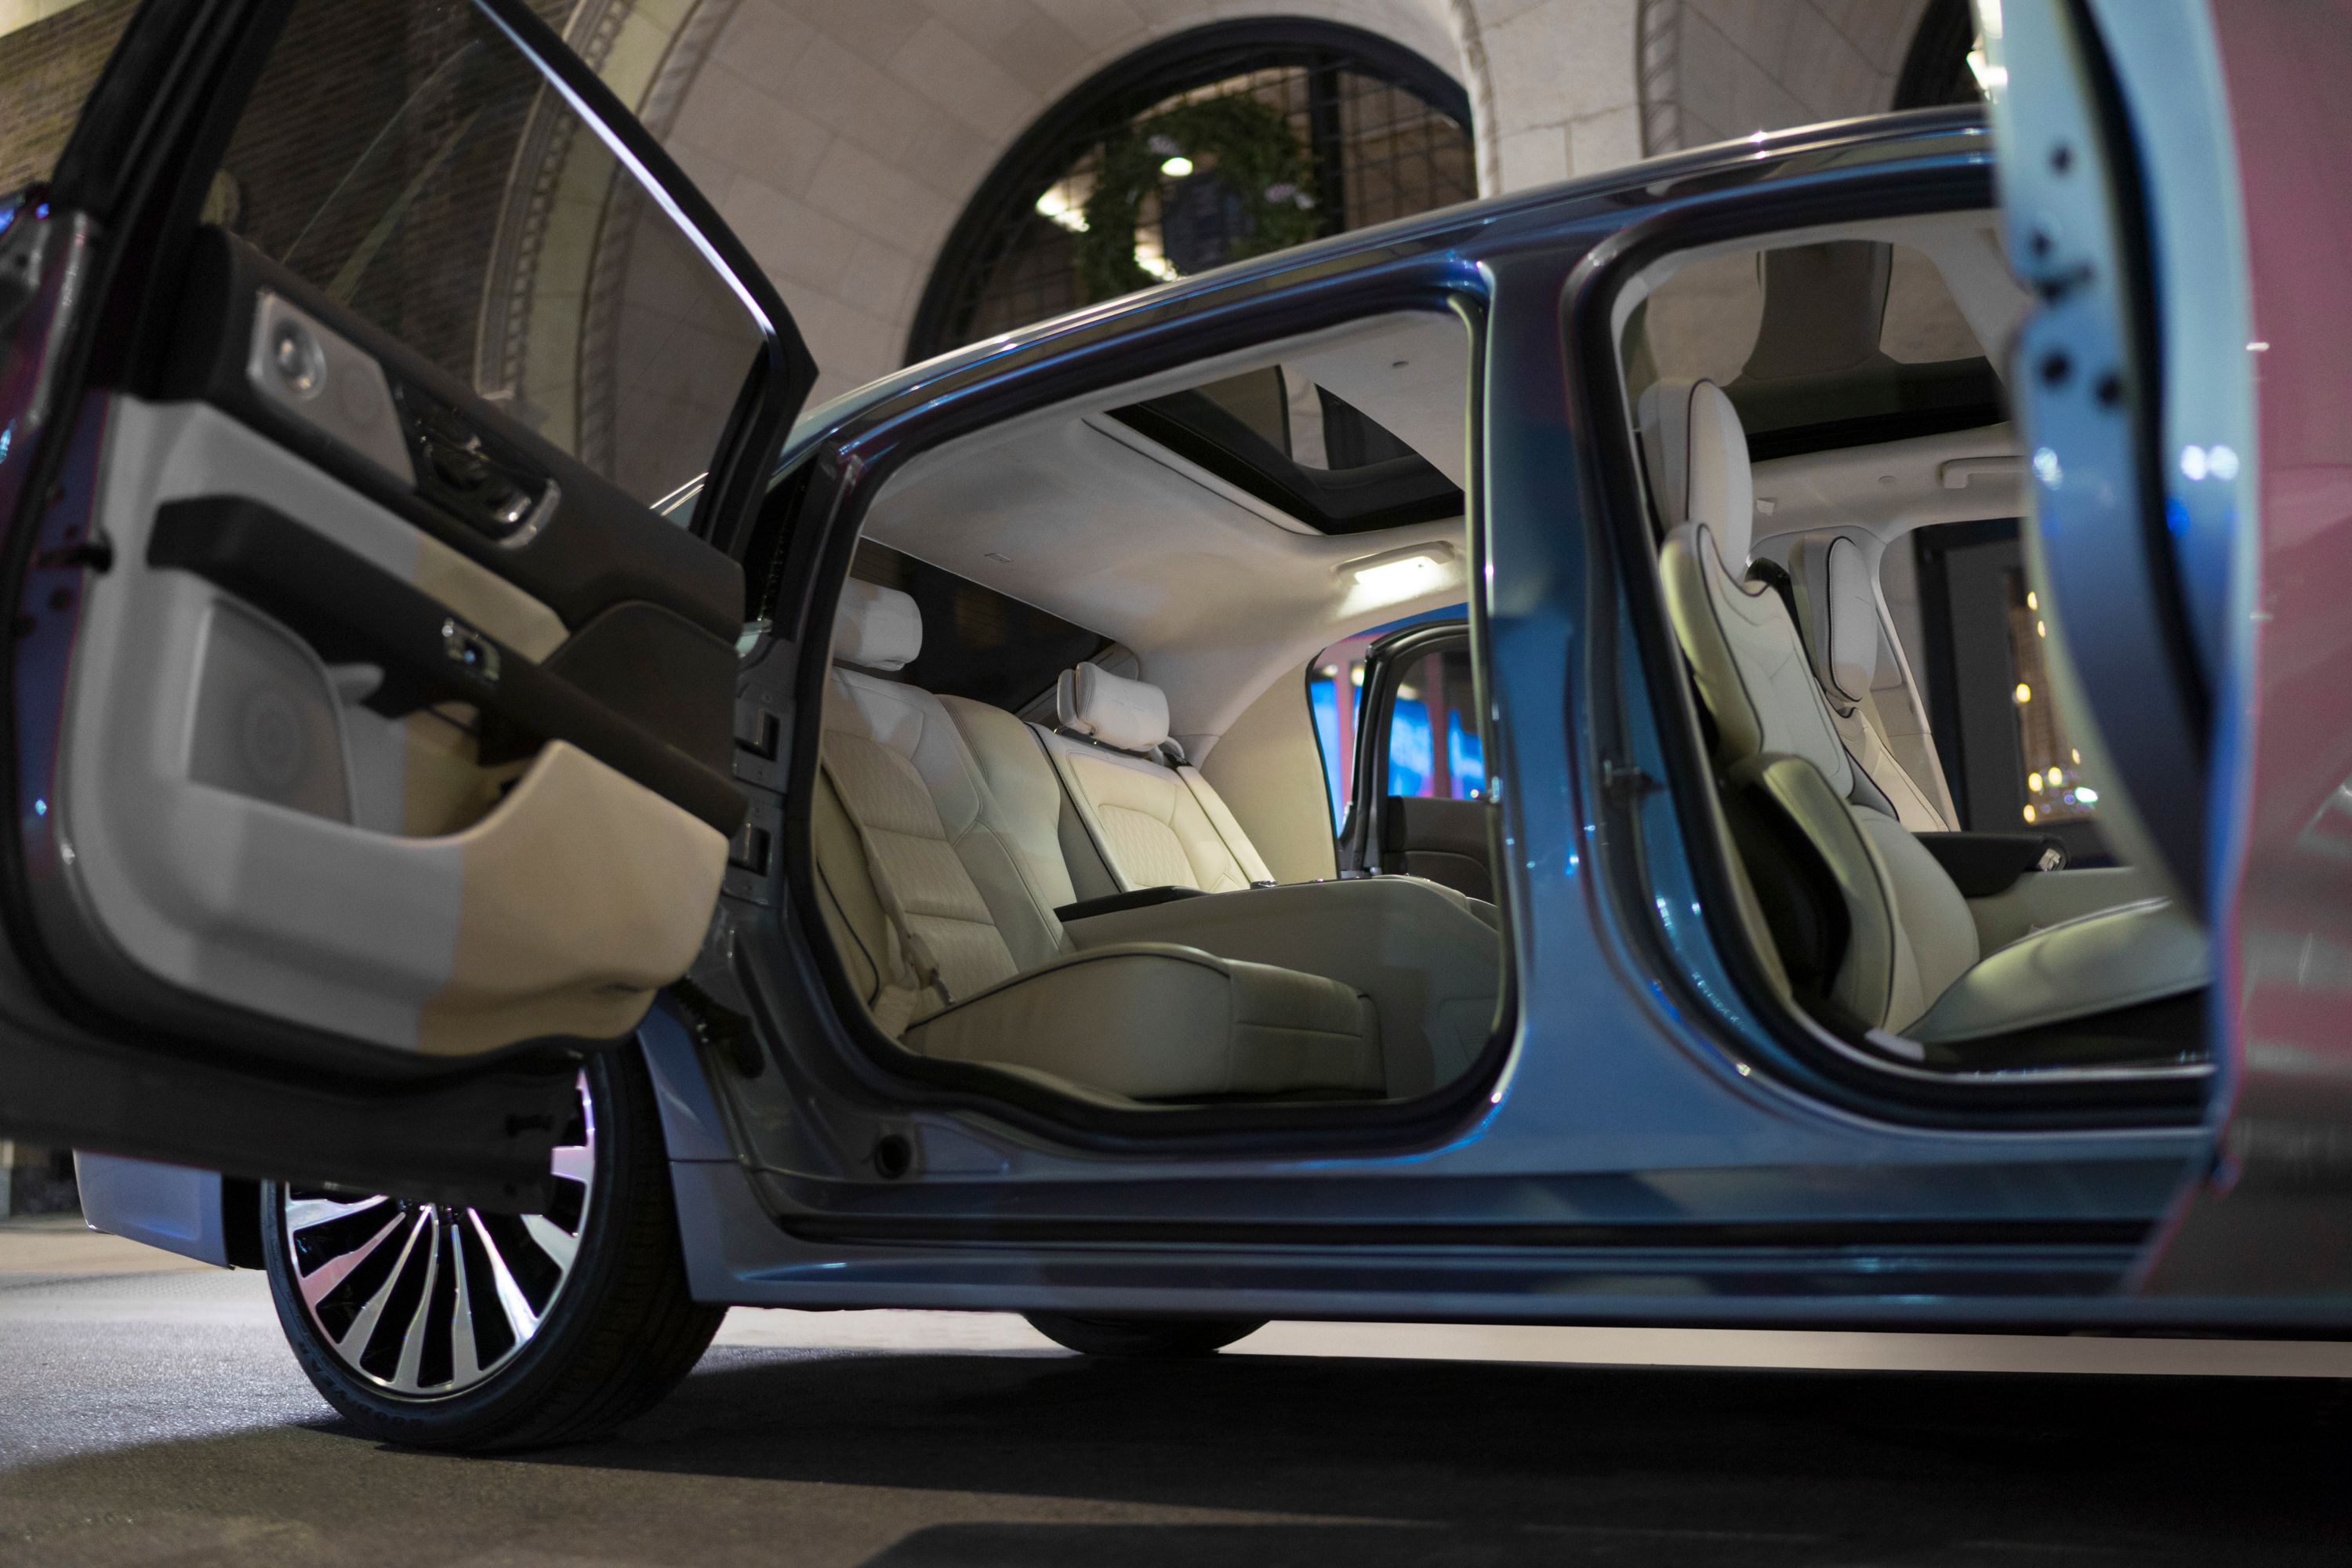 2020 Lincoln Continental Coach Door Edition